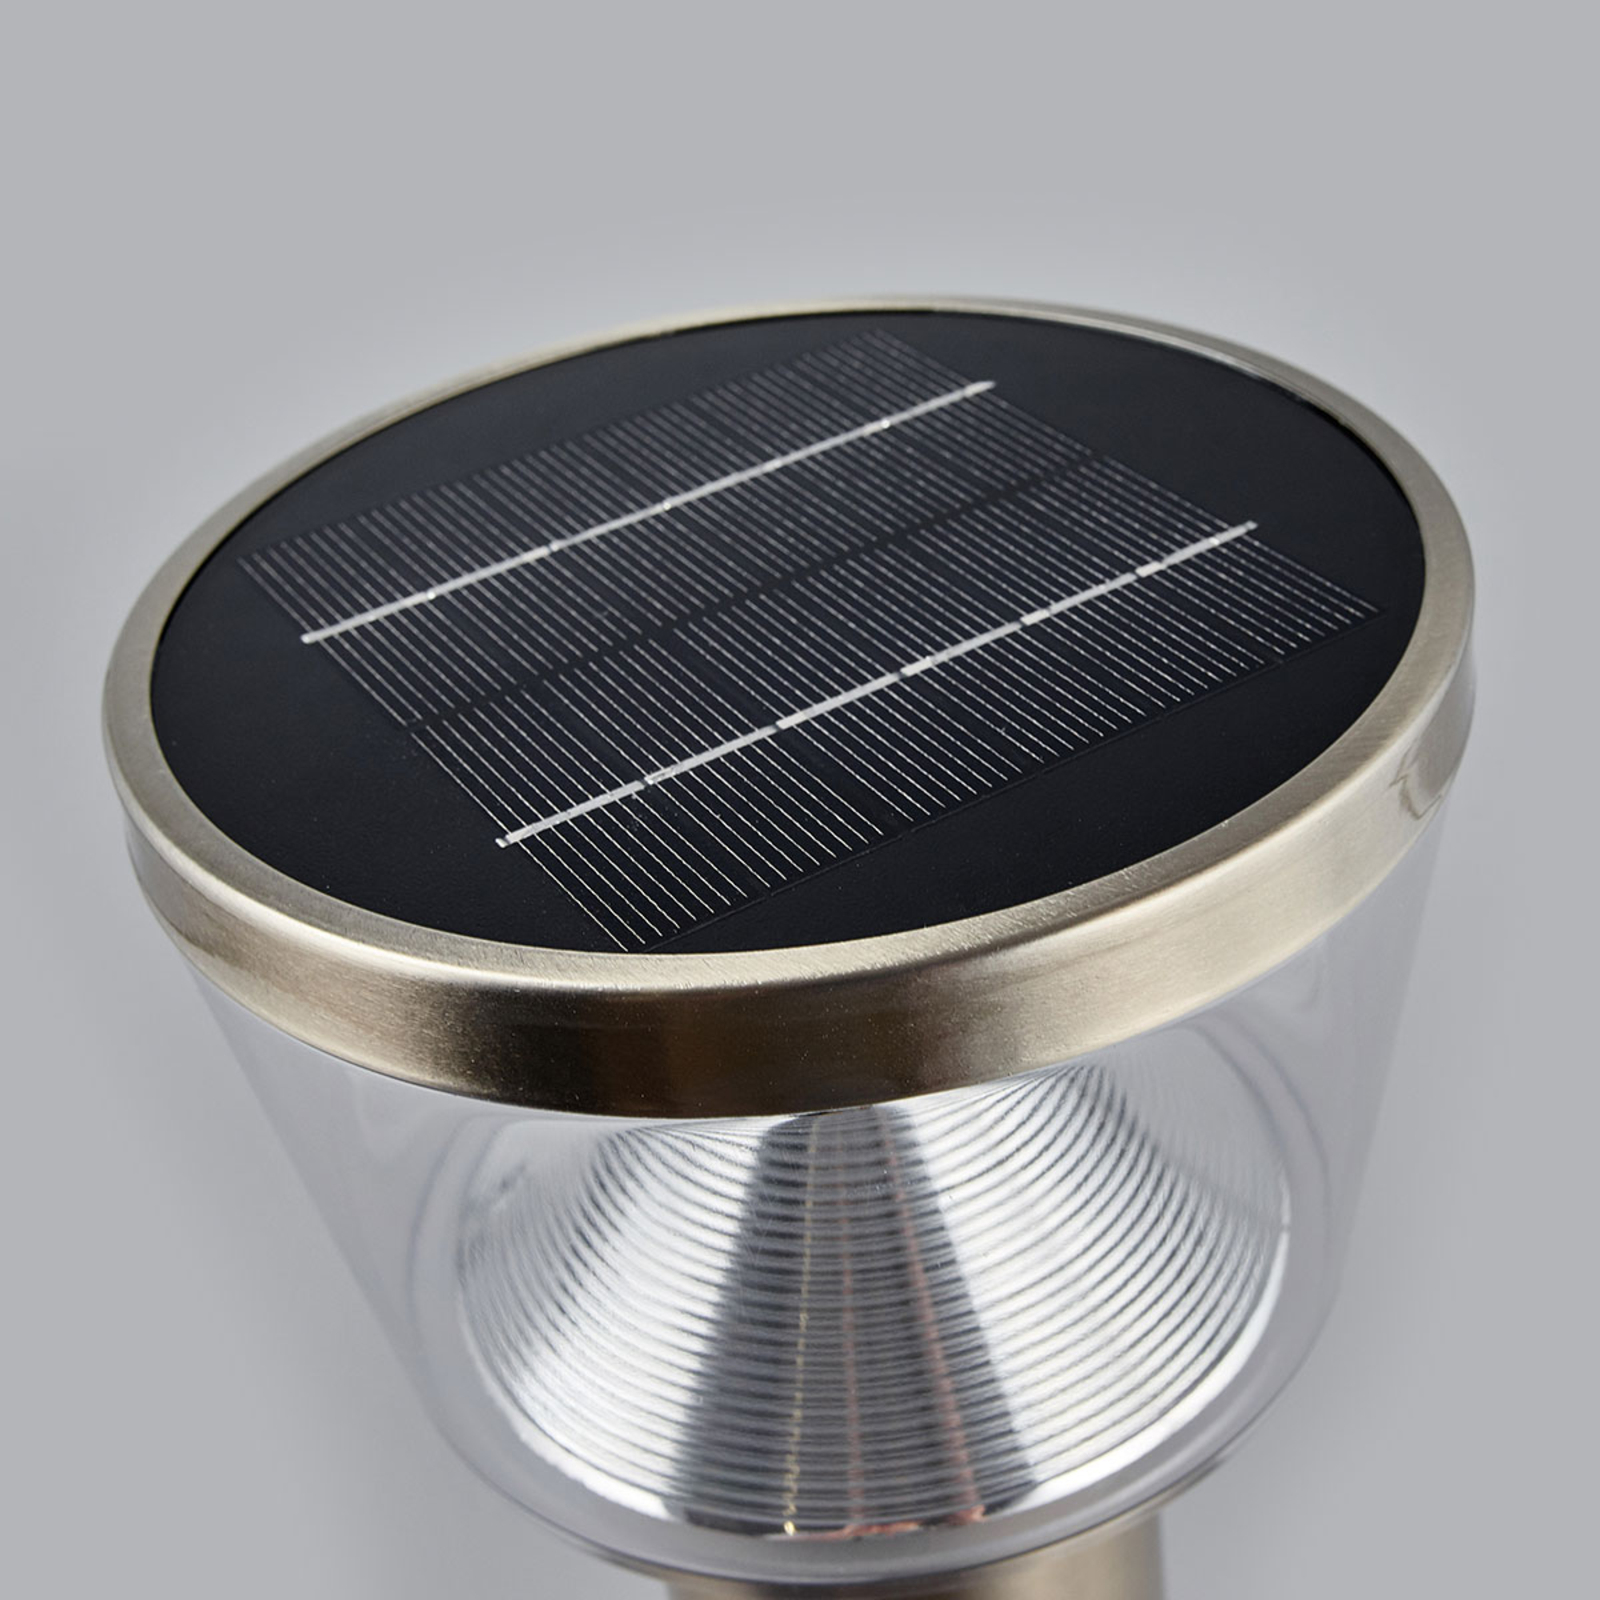 Farola LED solar Antje, sensor de movimiento